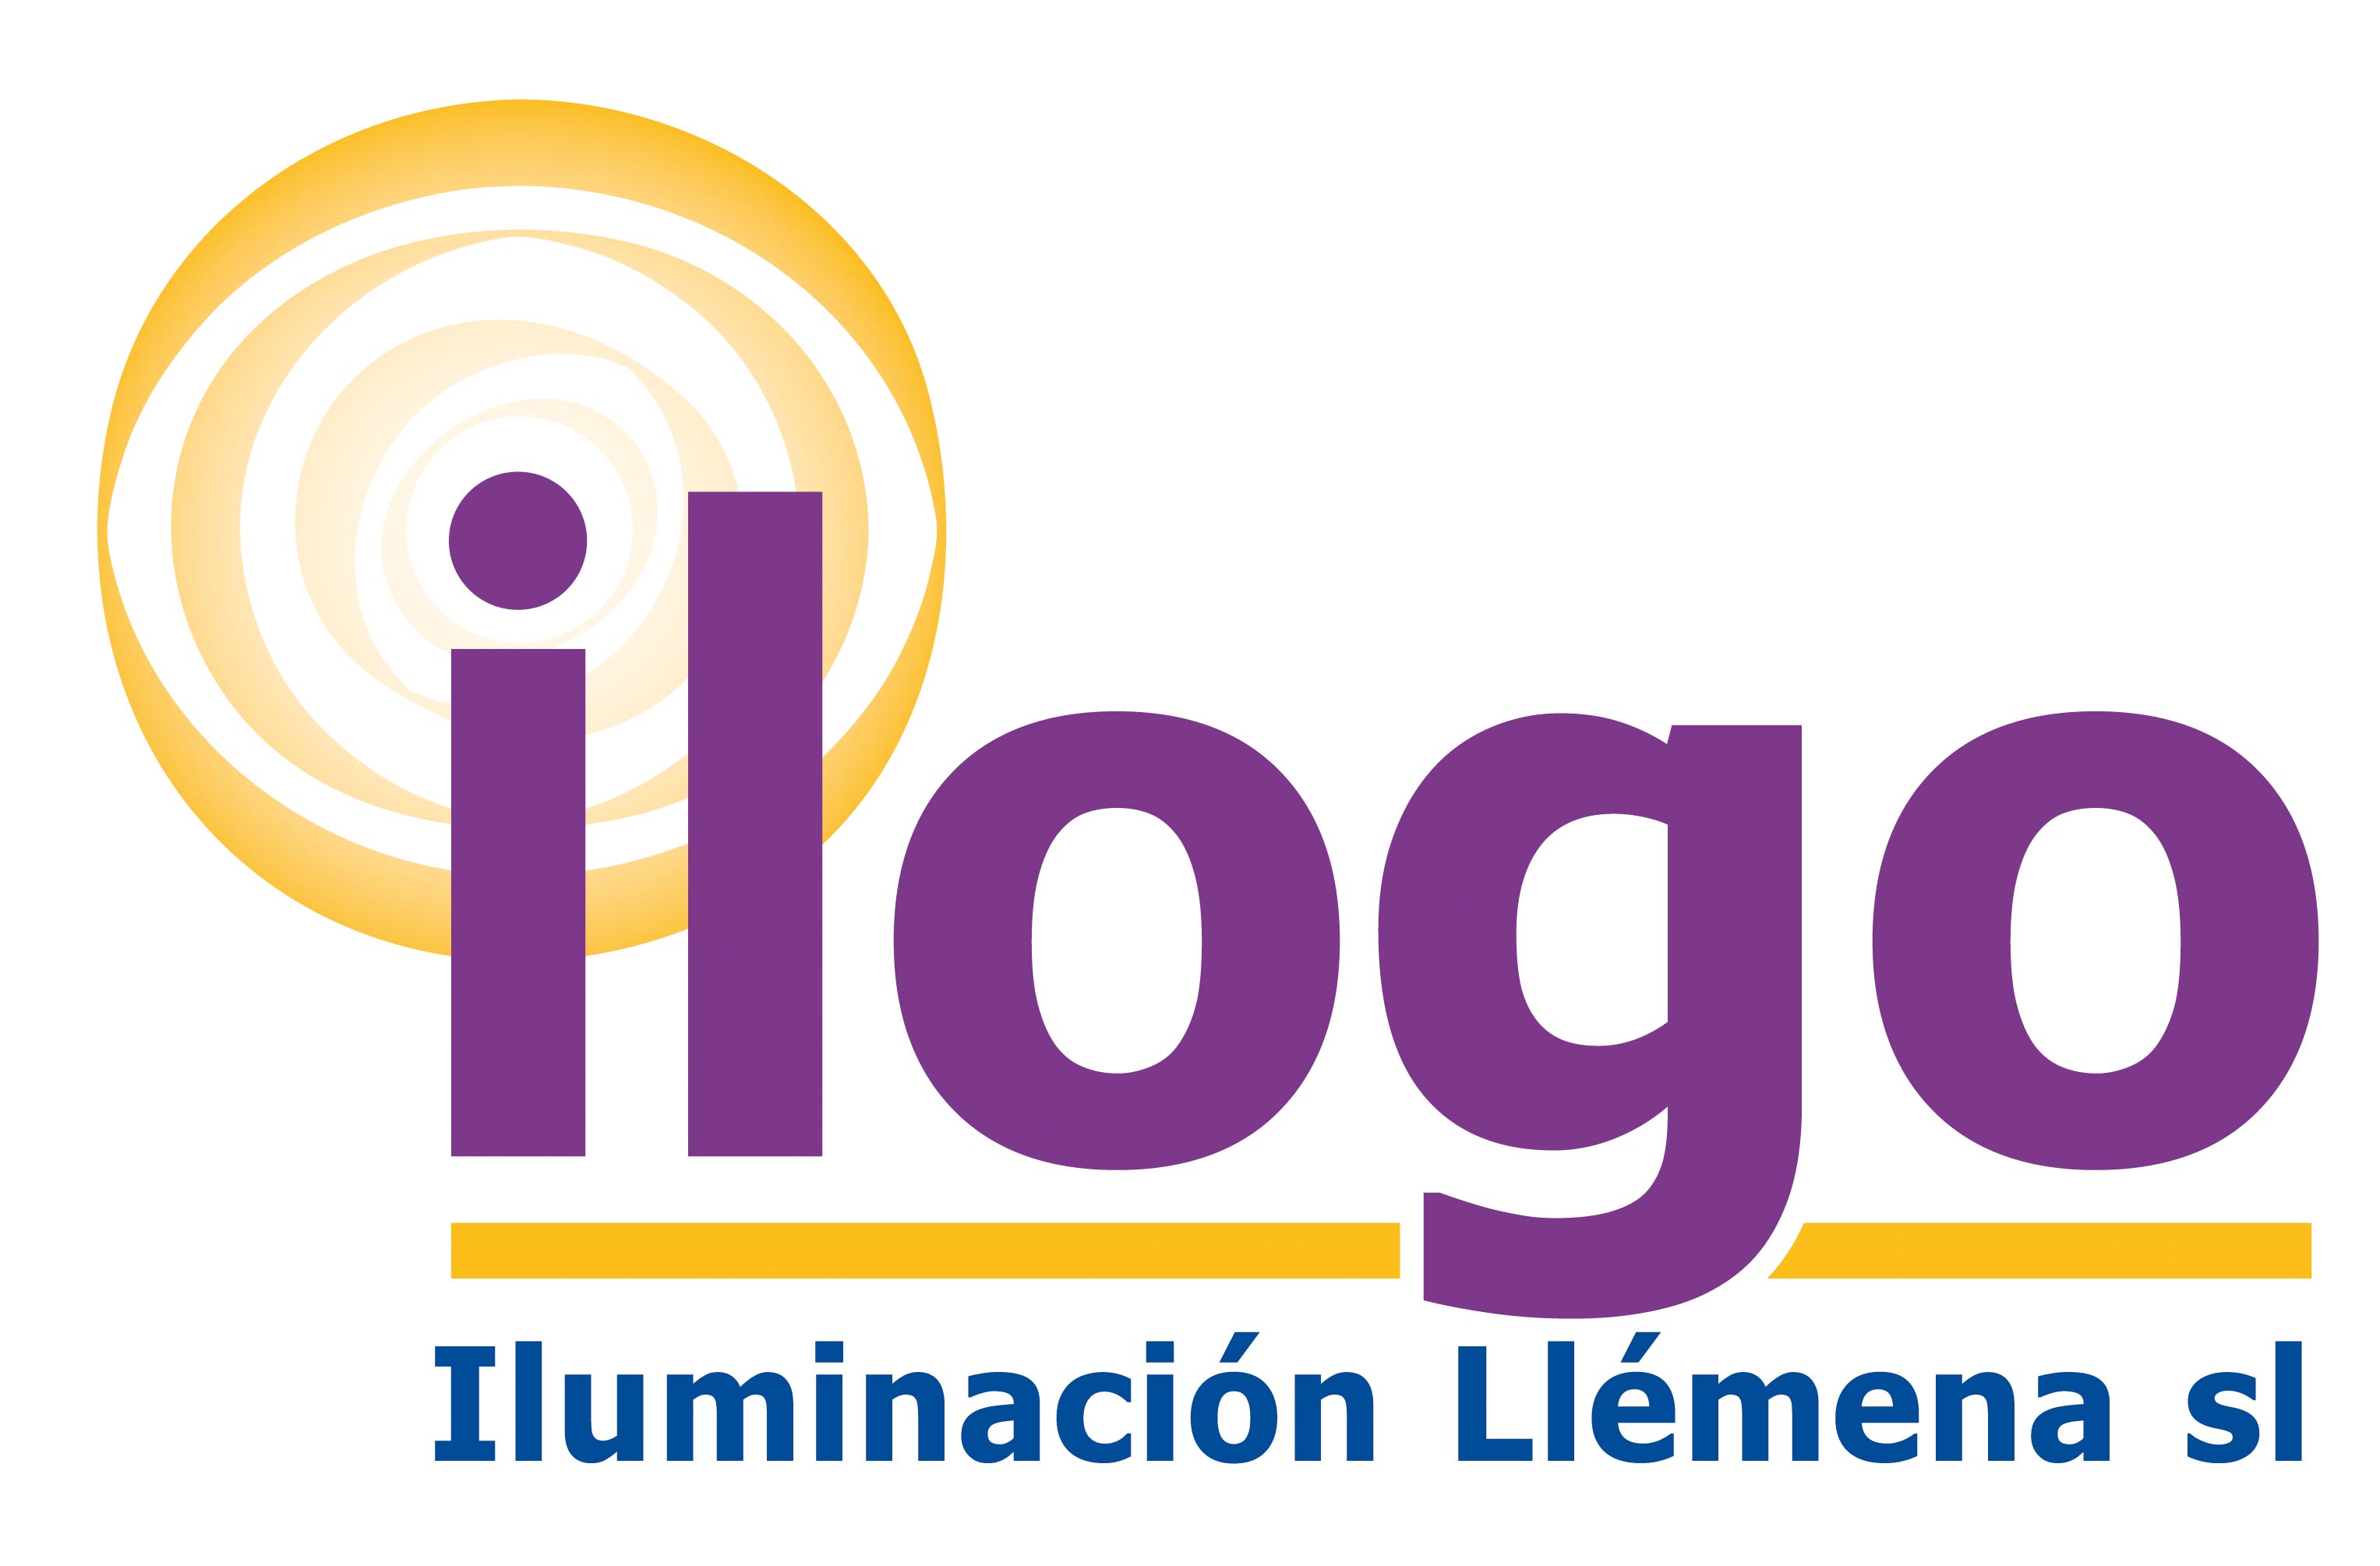 Iluminación Llémena, S.L. (ILOGO)